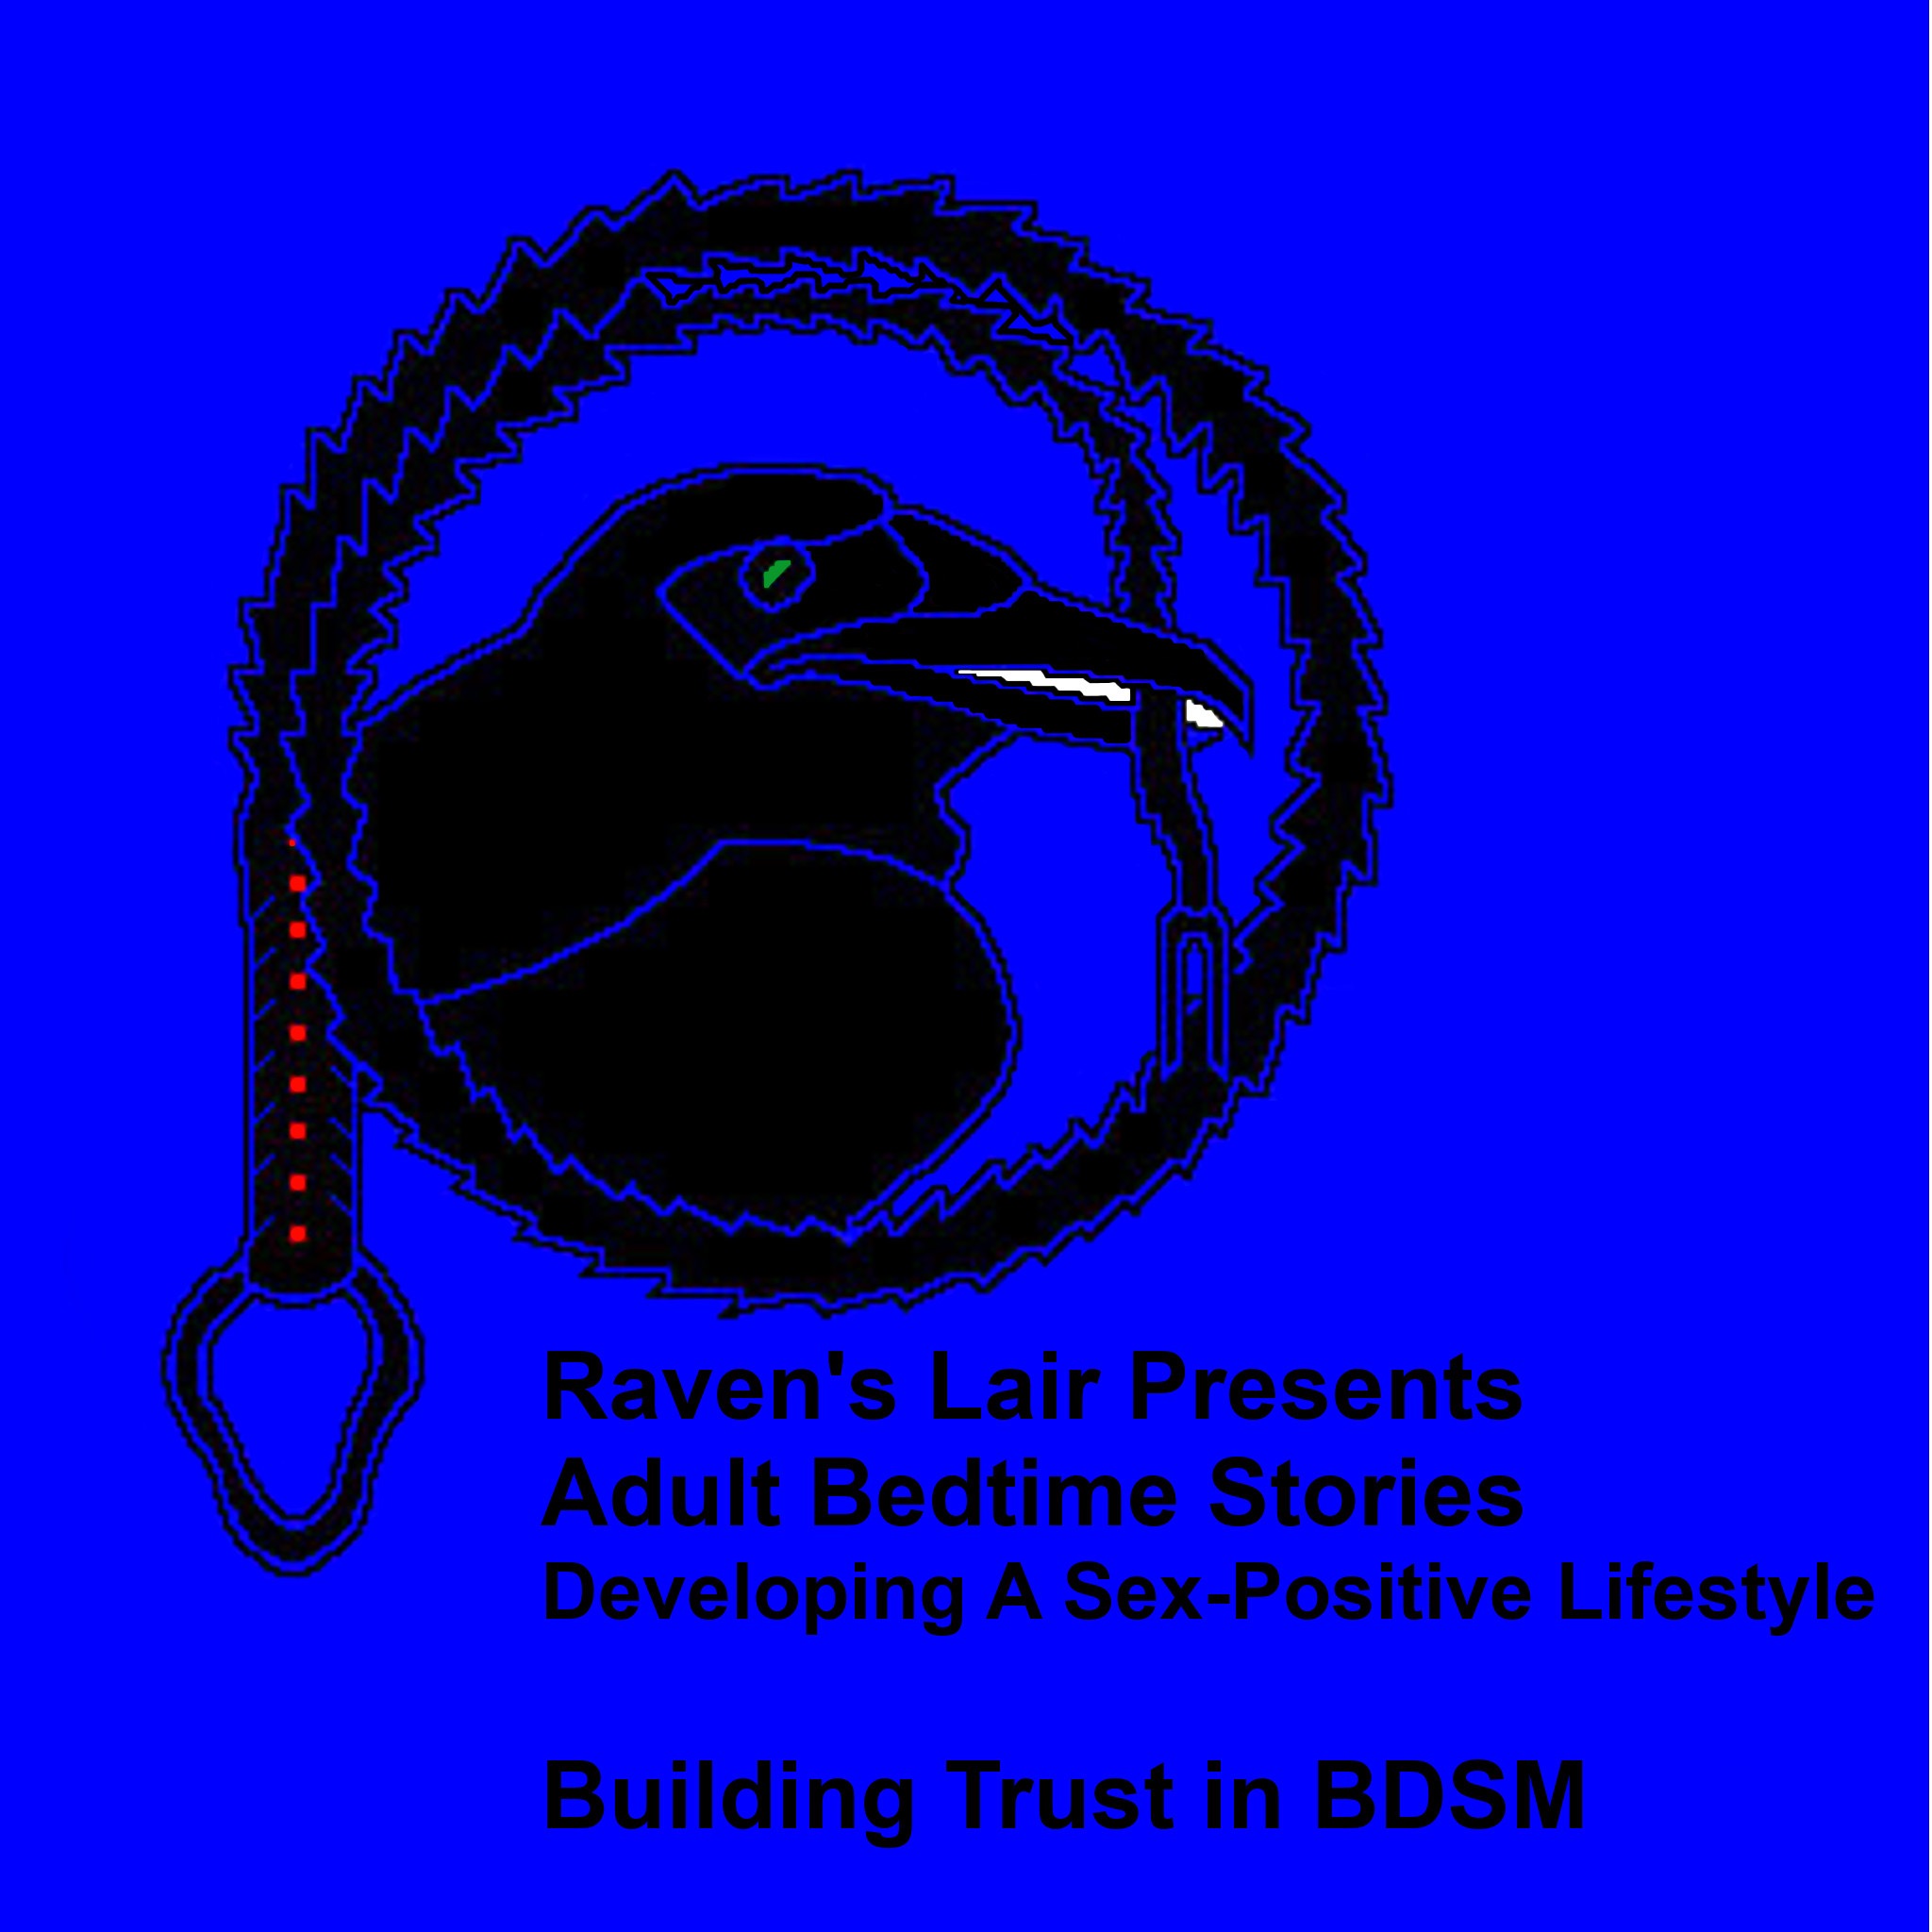 Building Trust through BDSM